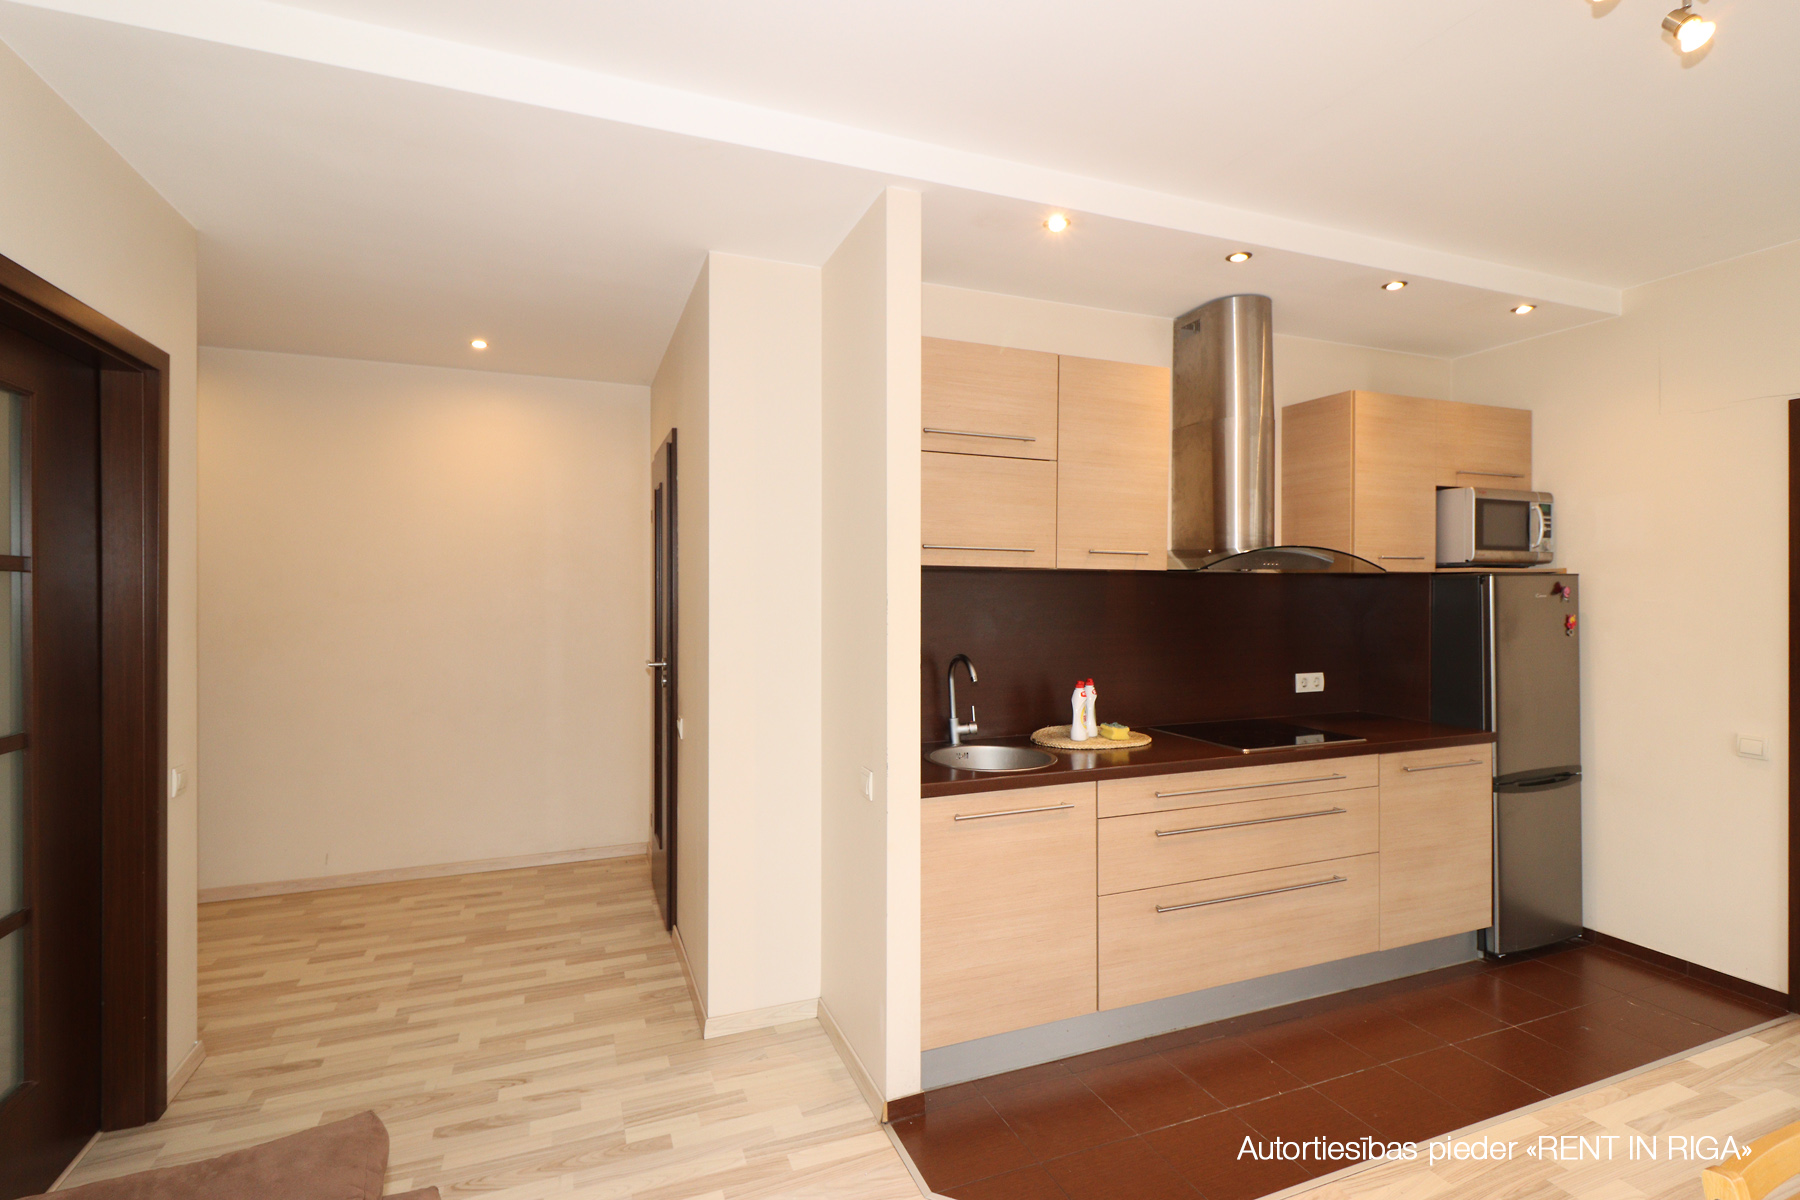 Apartment for rent, Ludzas street 56 - Image 1